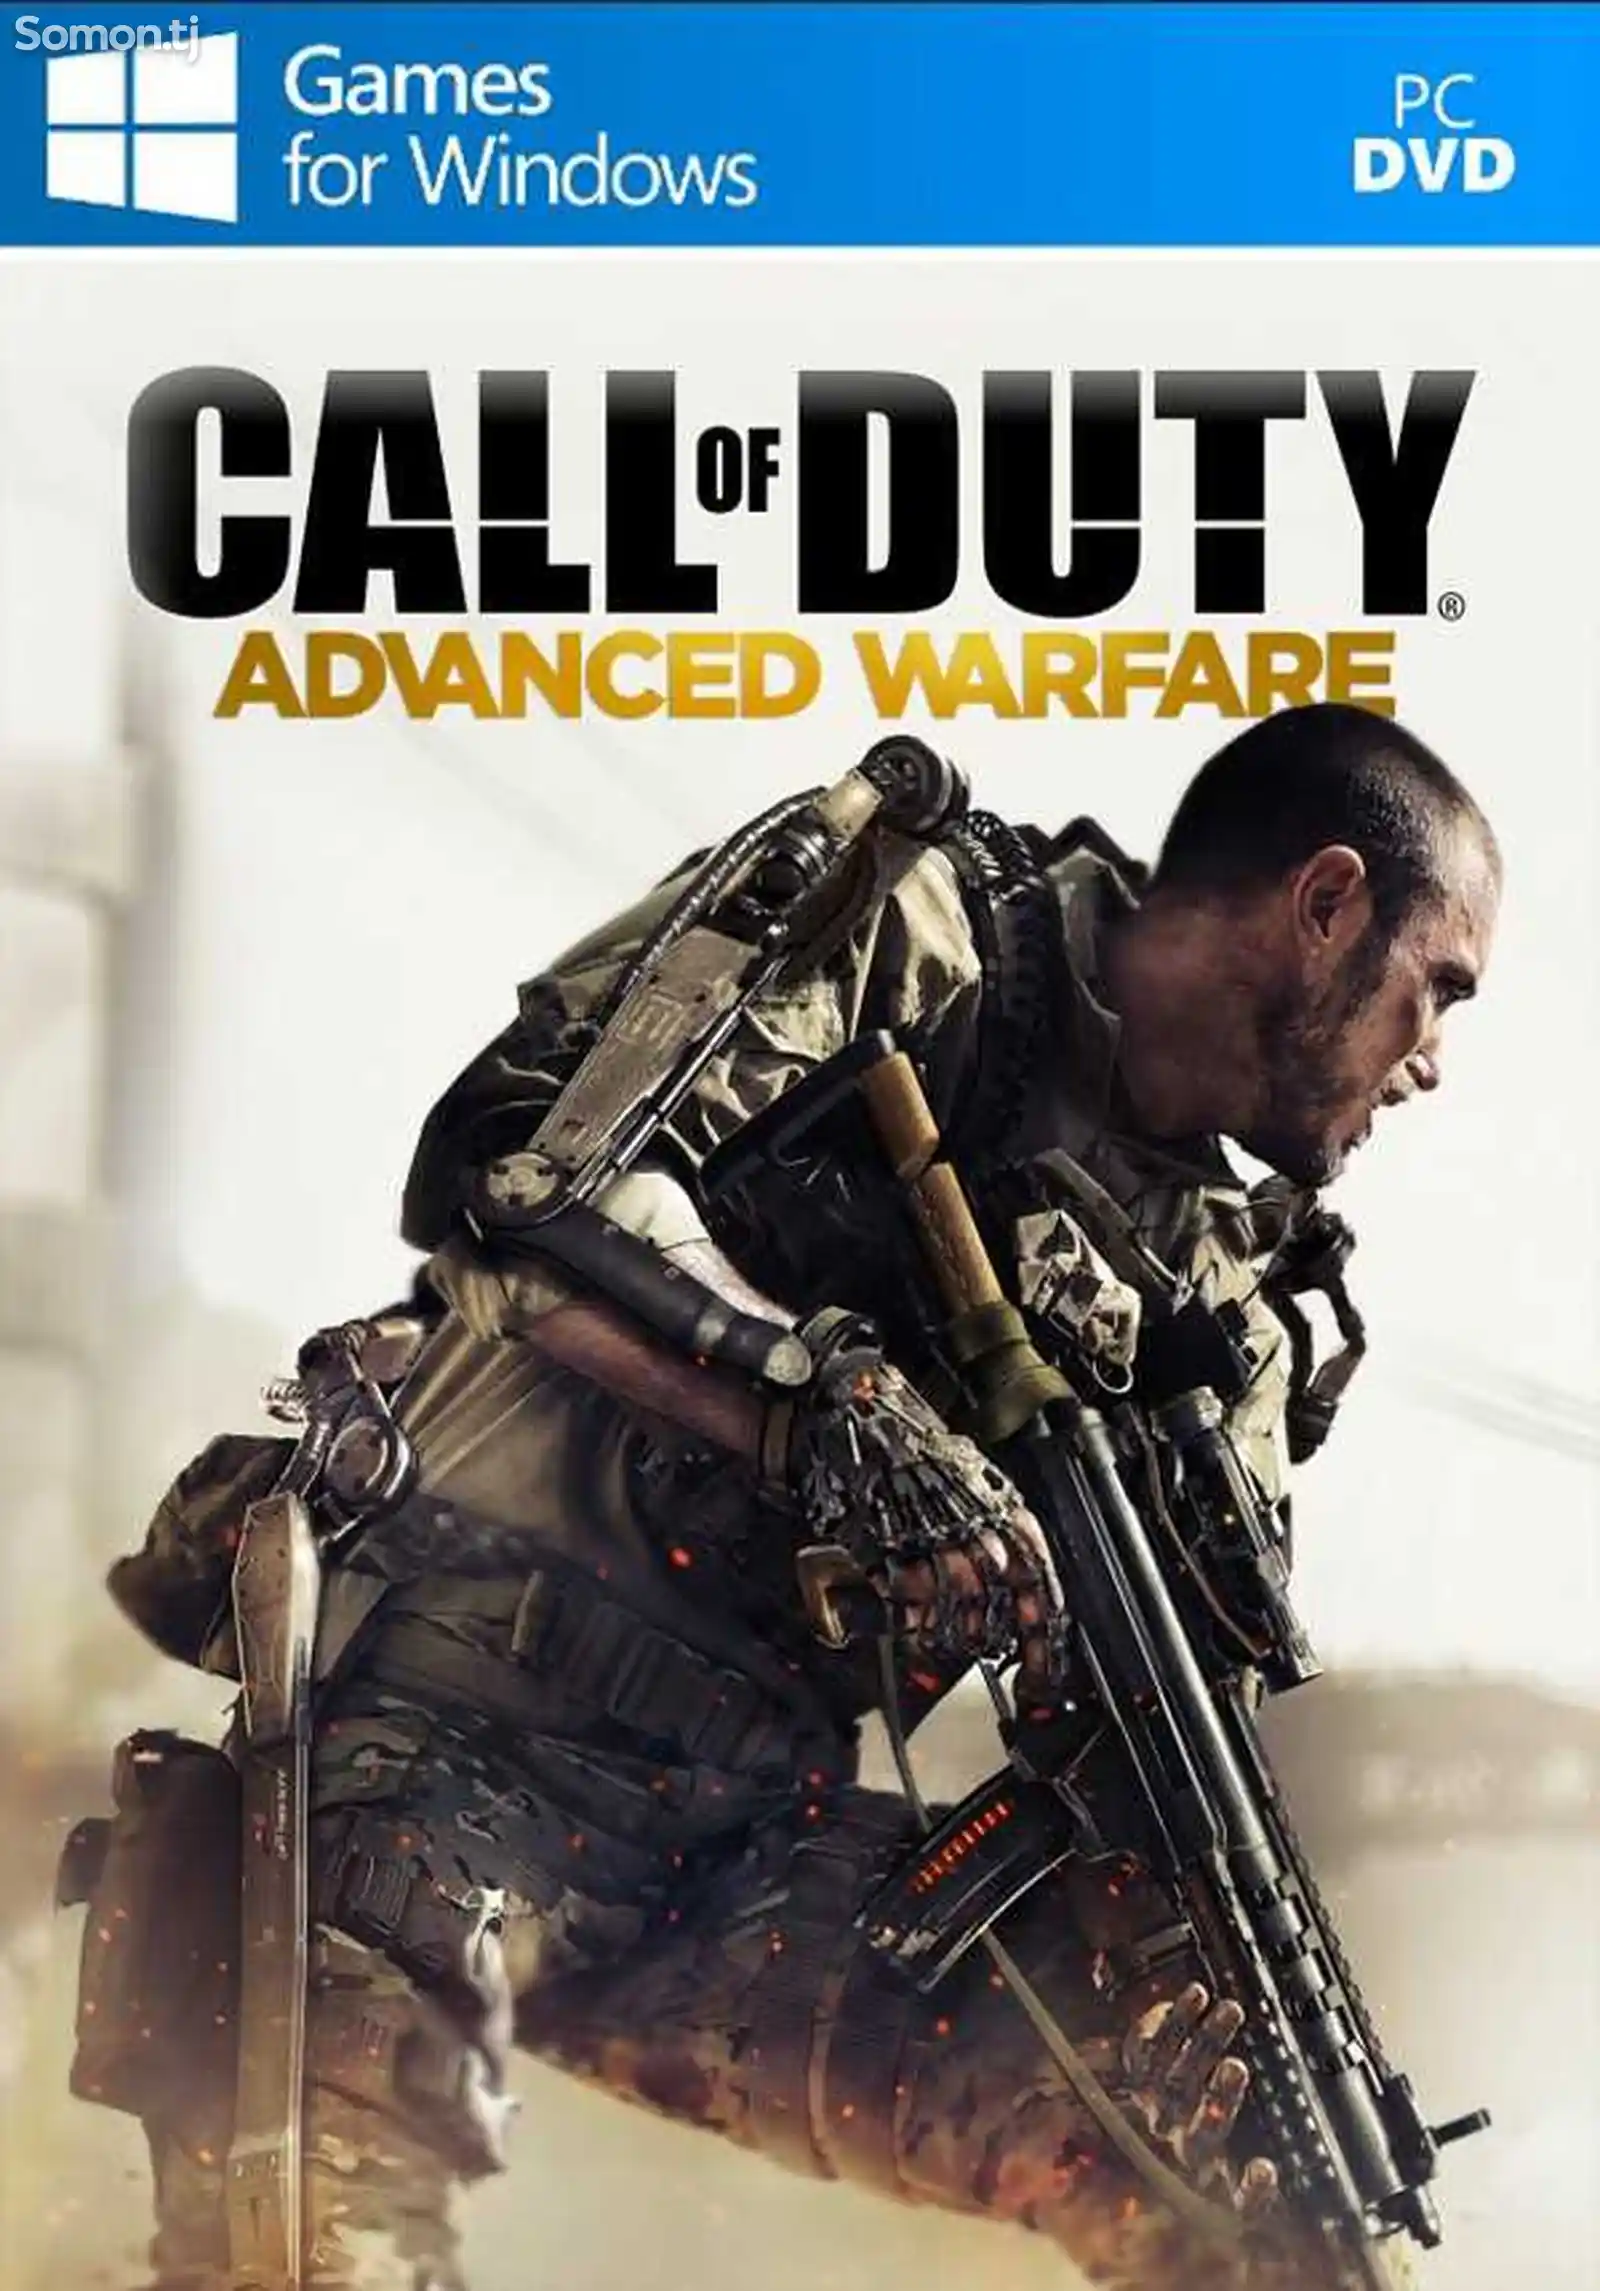 Игра Call of duty advanced warfare 2014 для компьютера-пк-pc-1